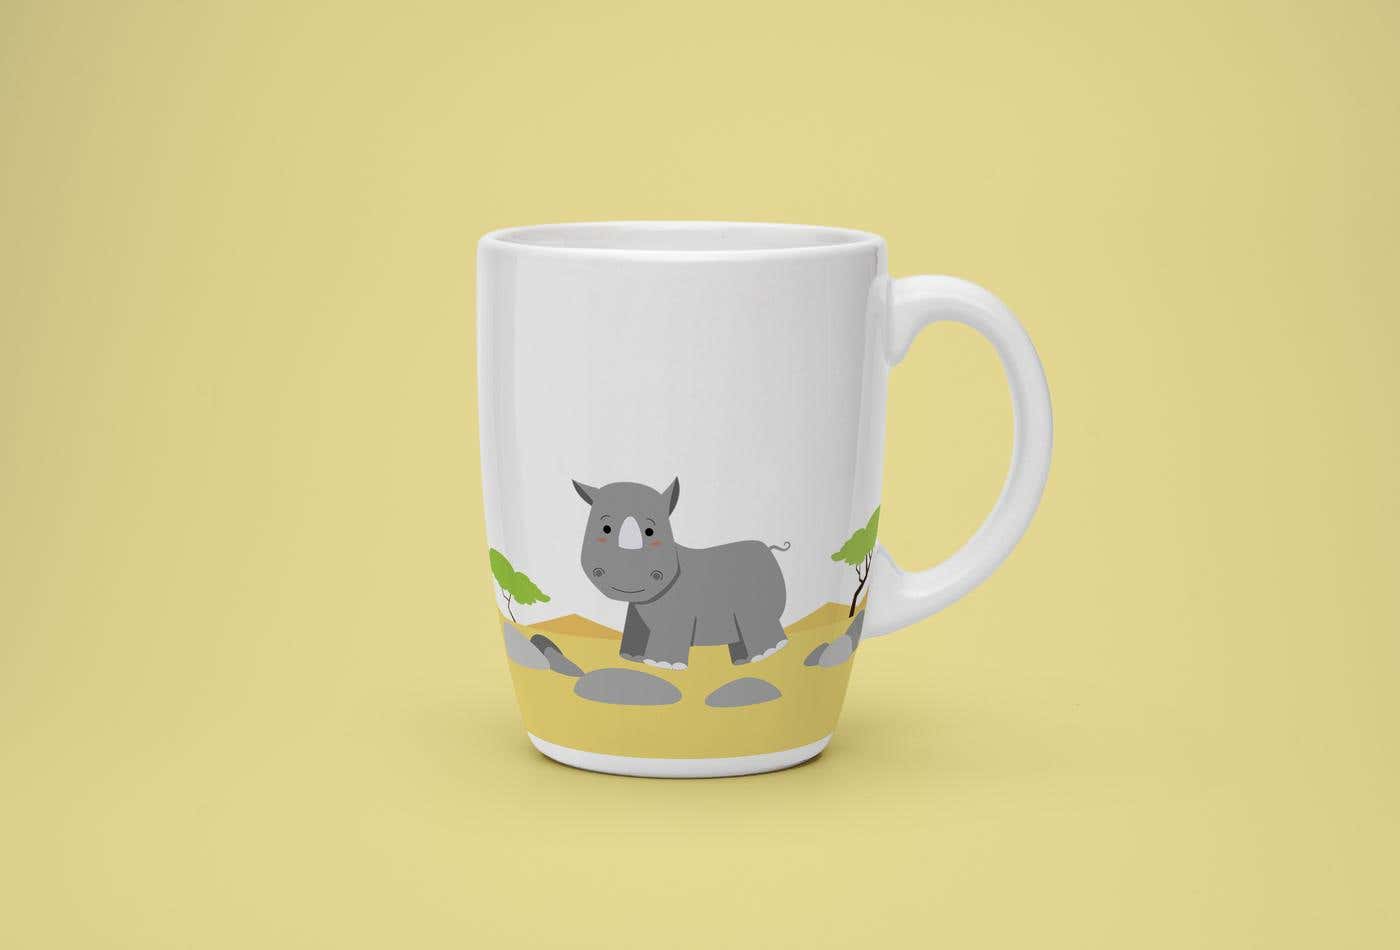 rhino-new-cup.jpg